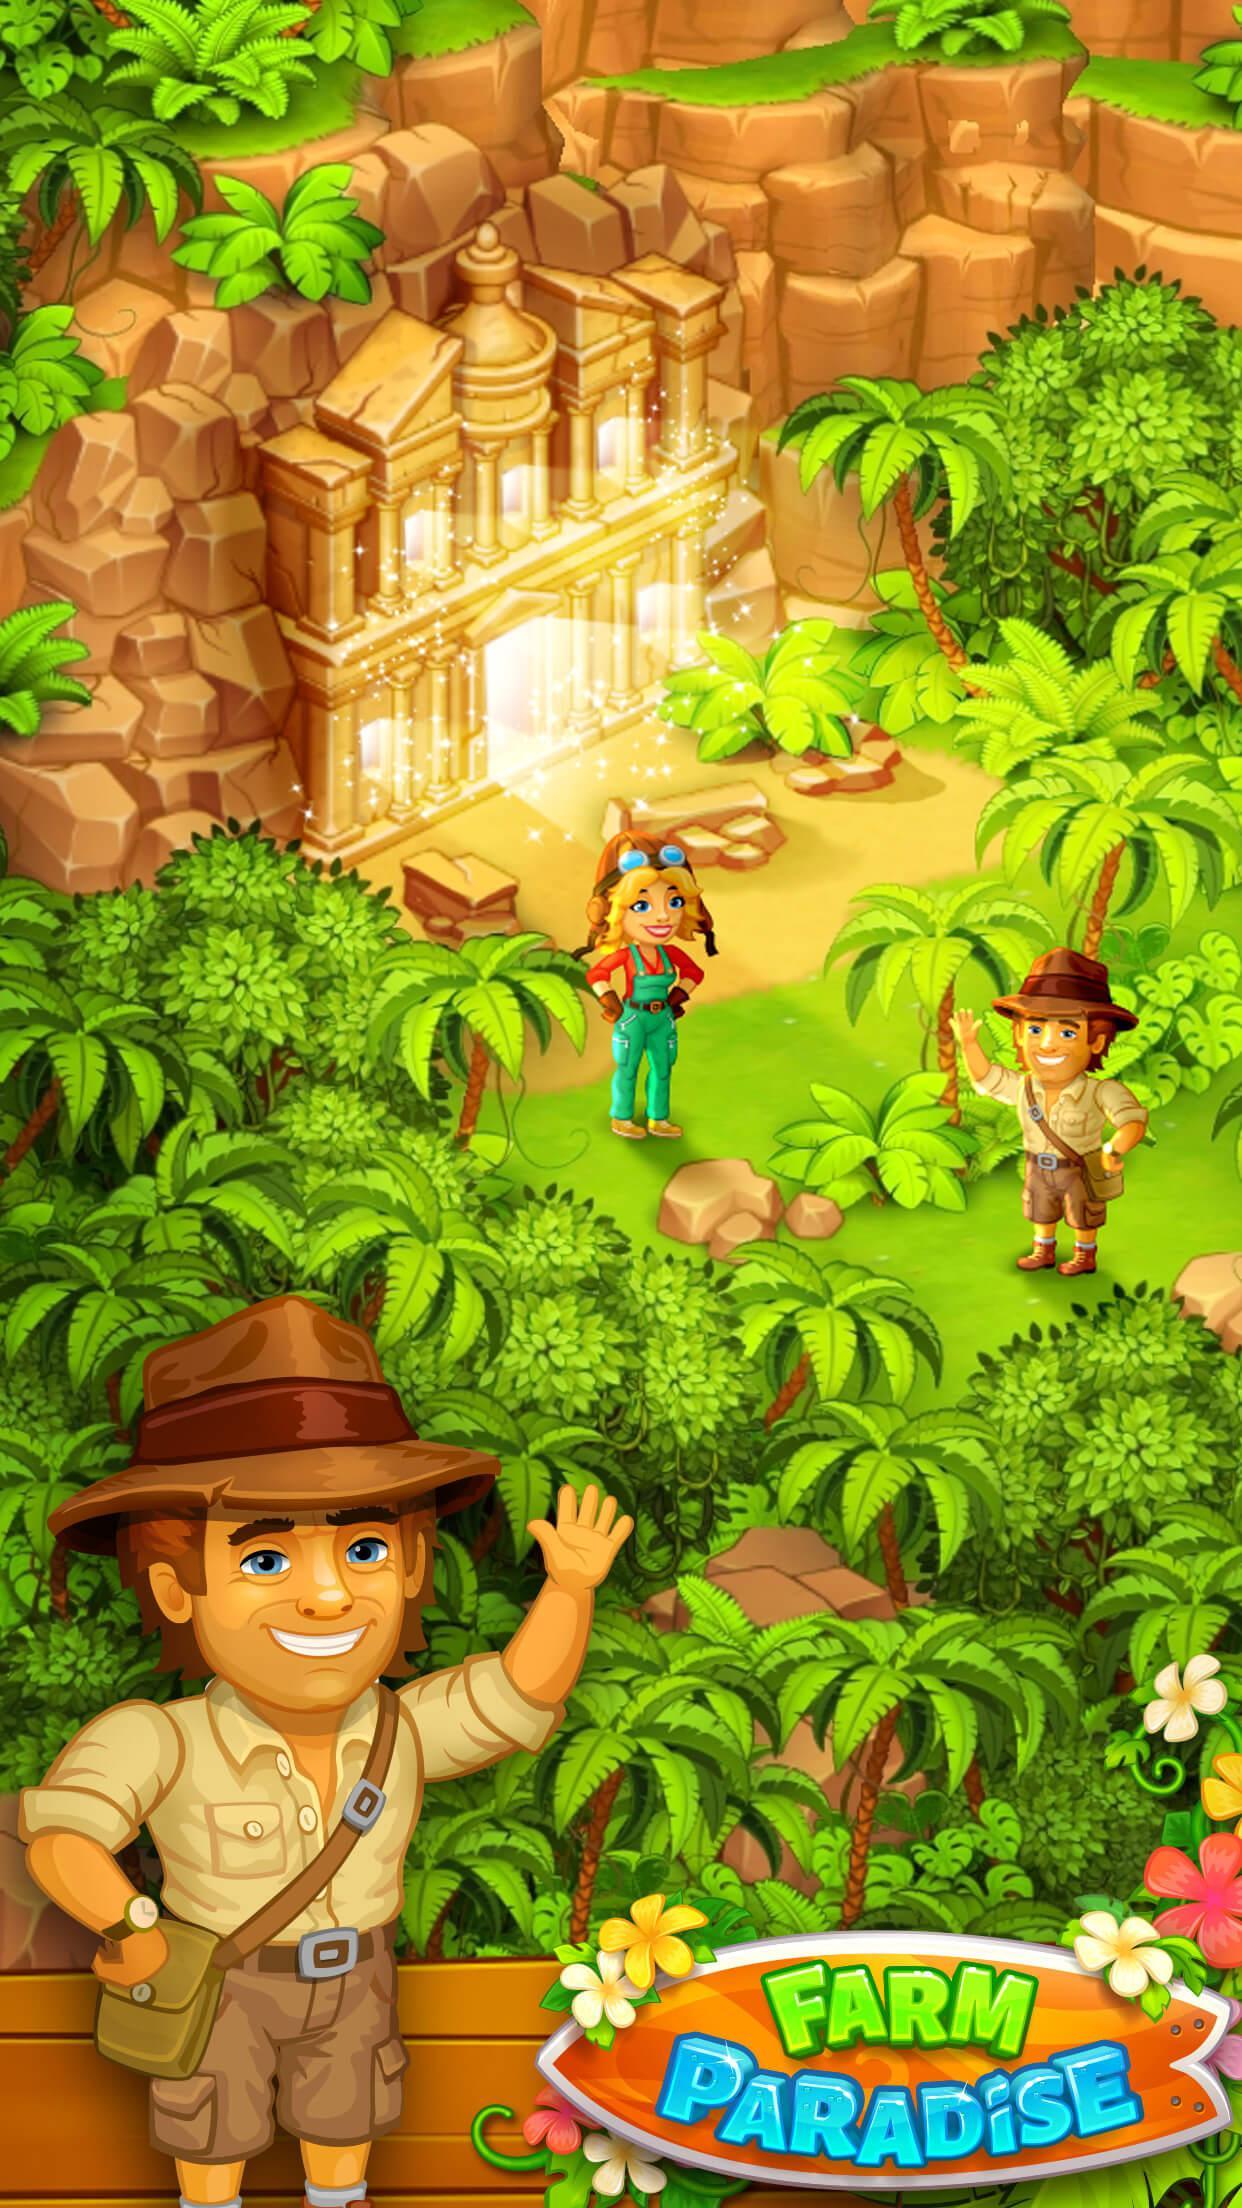 Farm Paradise Fun farm trade game at lost island 2.17 Screenshot 5